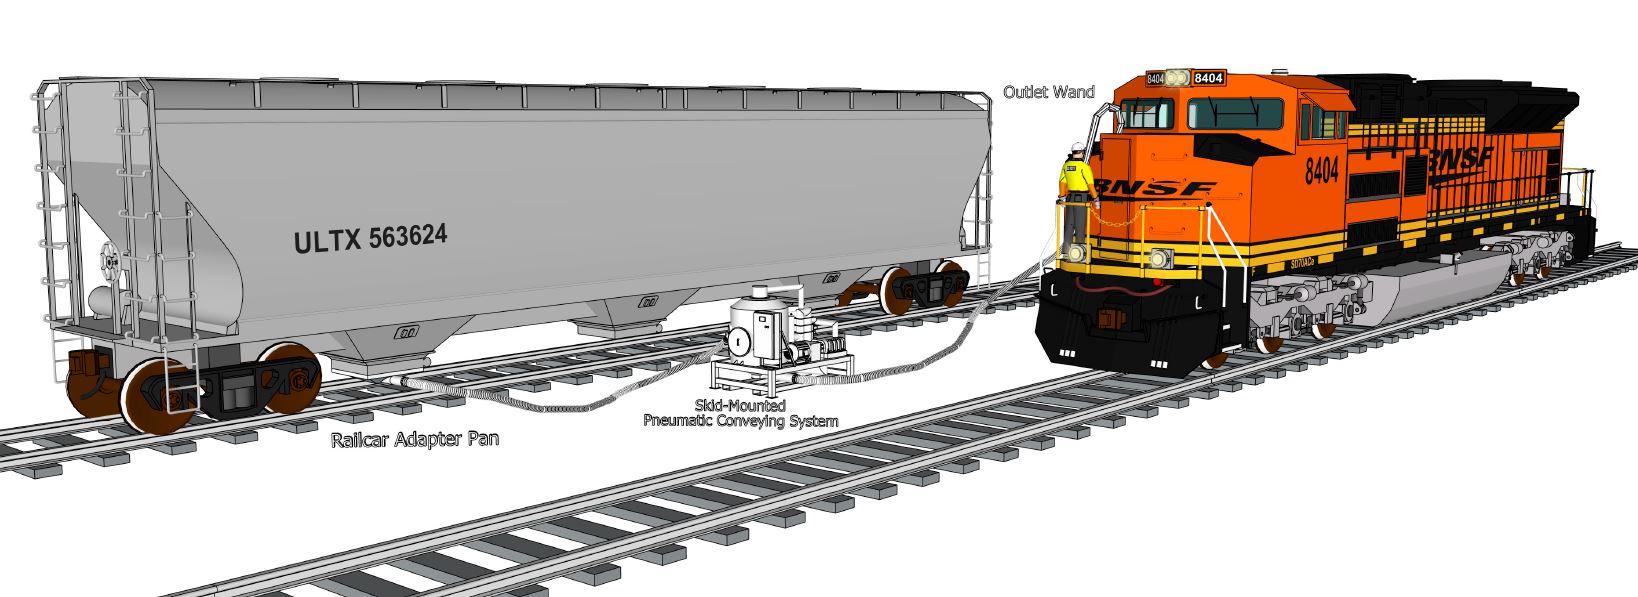 Locomotive Engine Sanding System